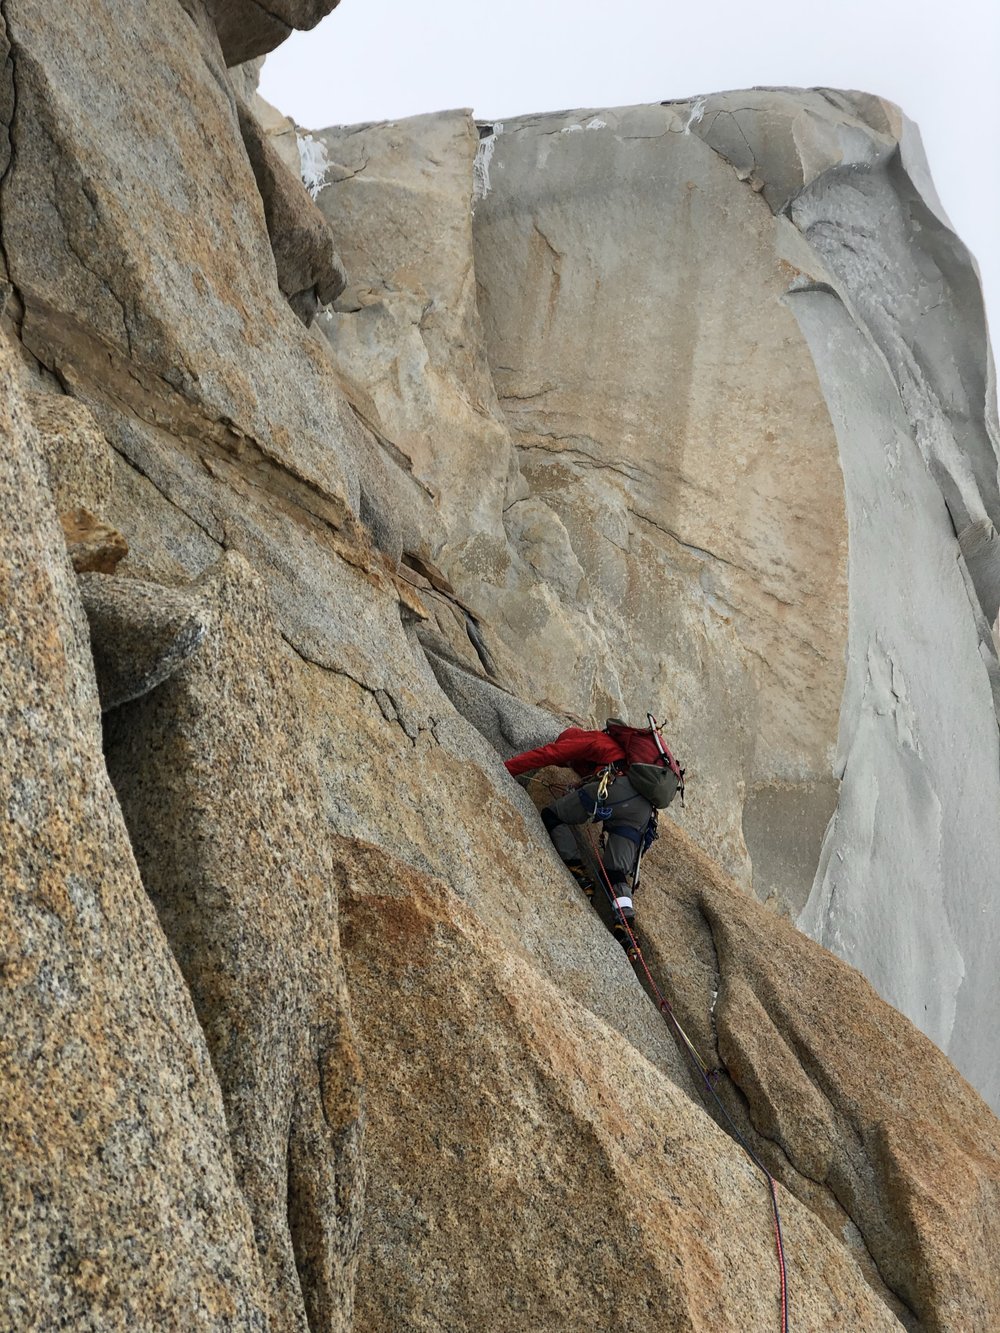 Rock climbing!